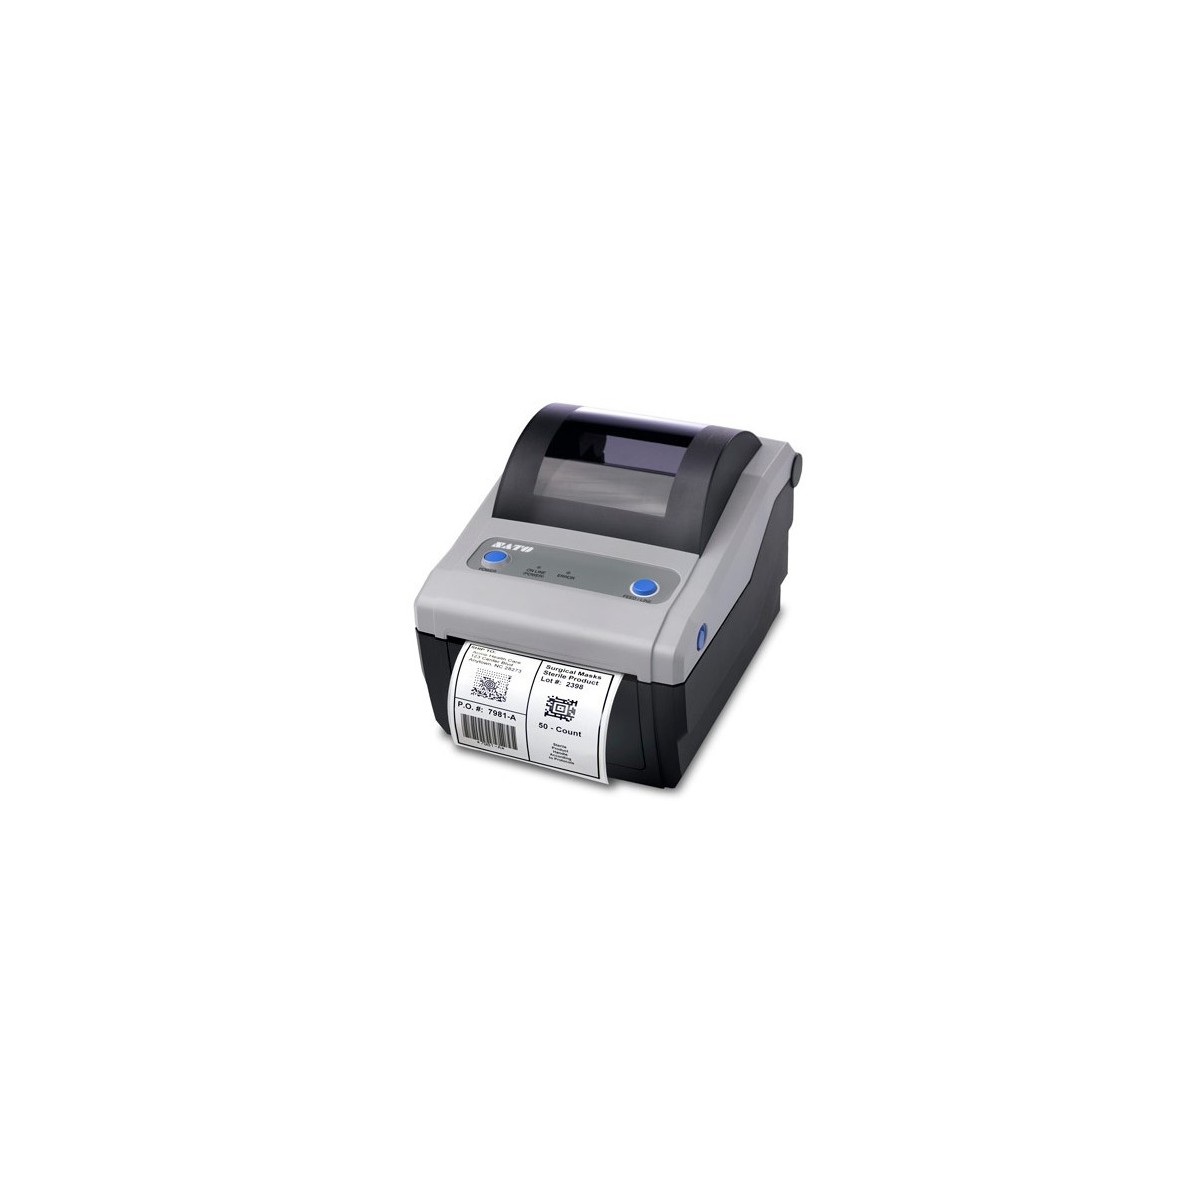 SATO CG408DT - Direkt Wärme - 203 x DPI - Verkabelt - Ethernet - 0.06 - 0.19 - Label Printer